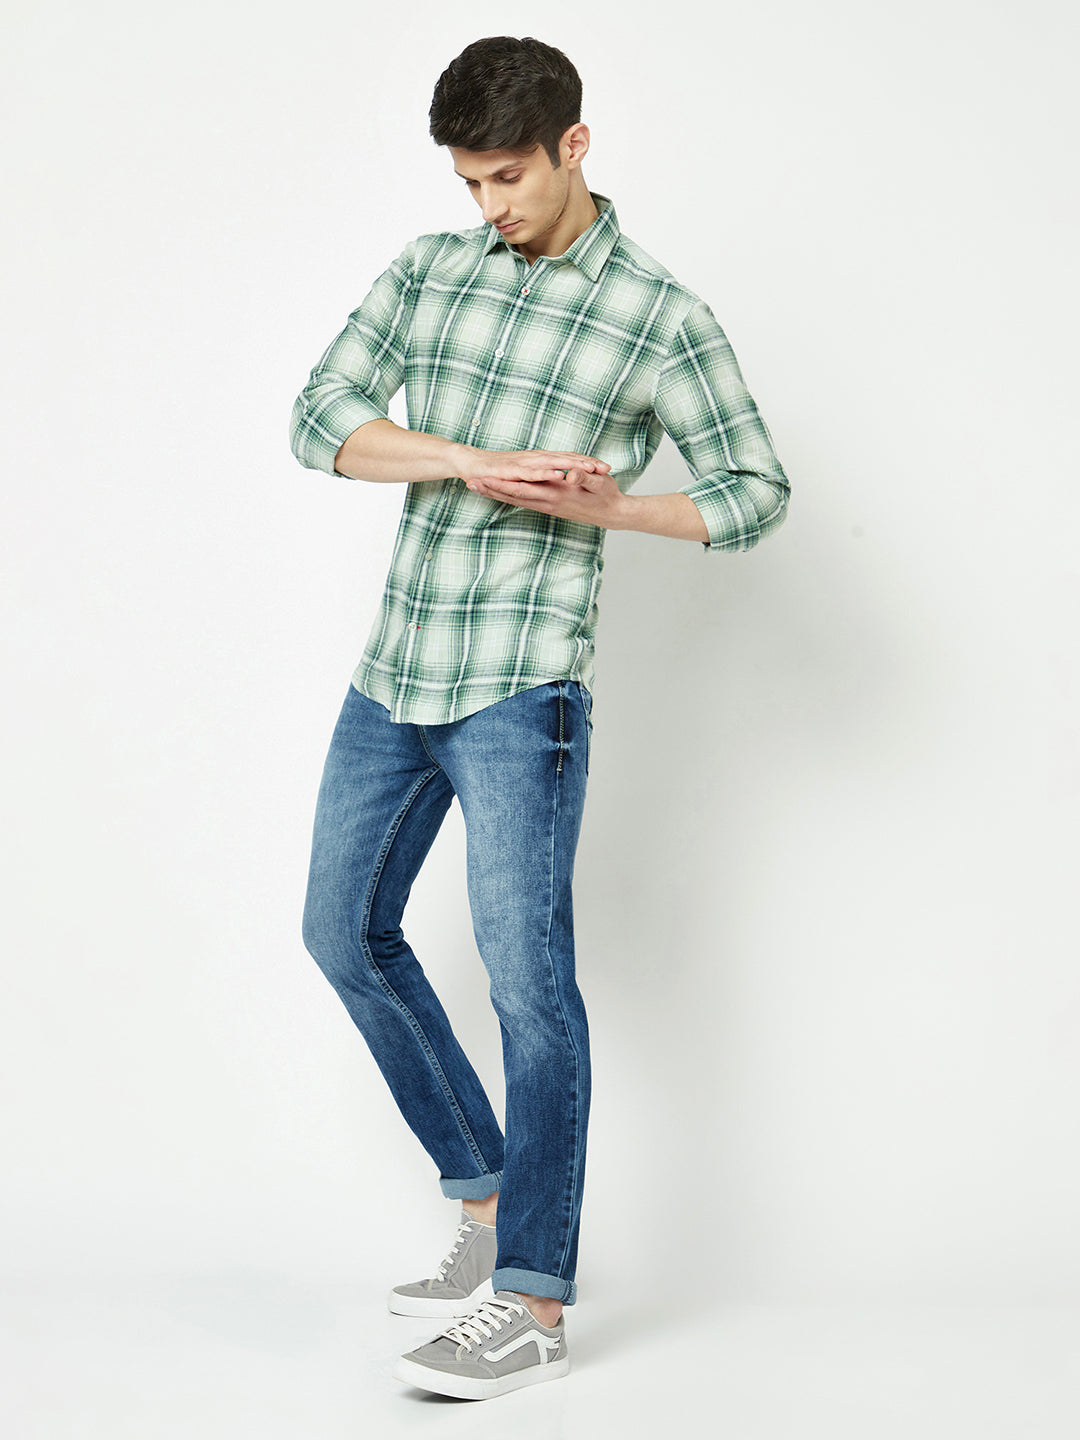  Green-Toned Checkered Shirt